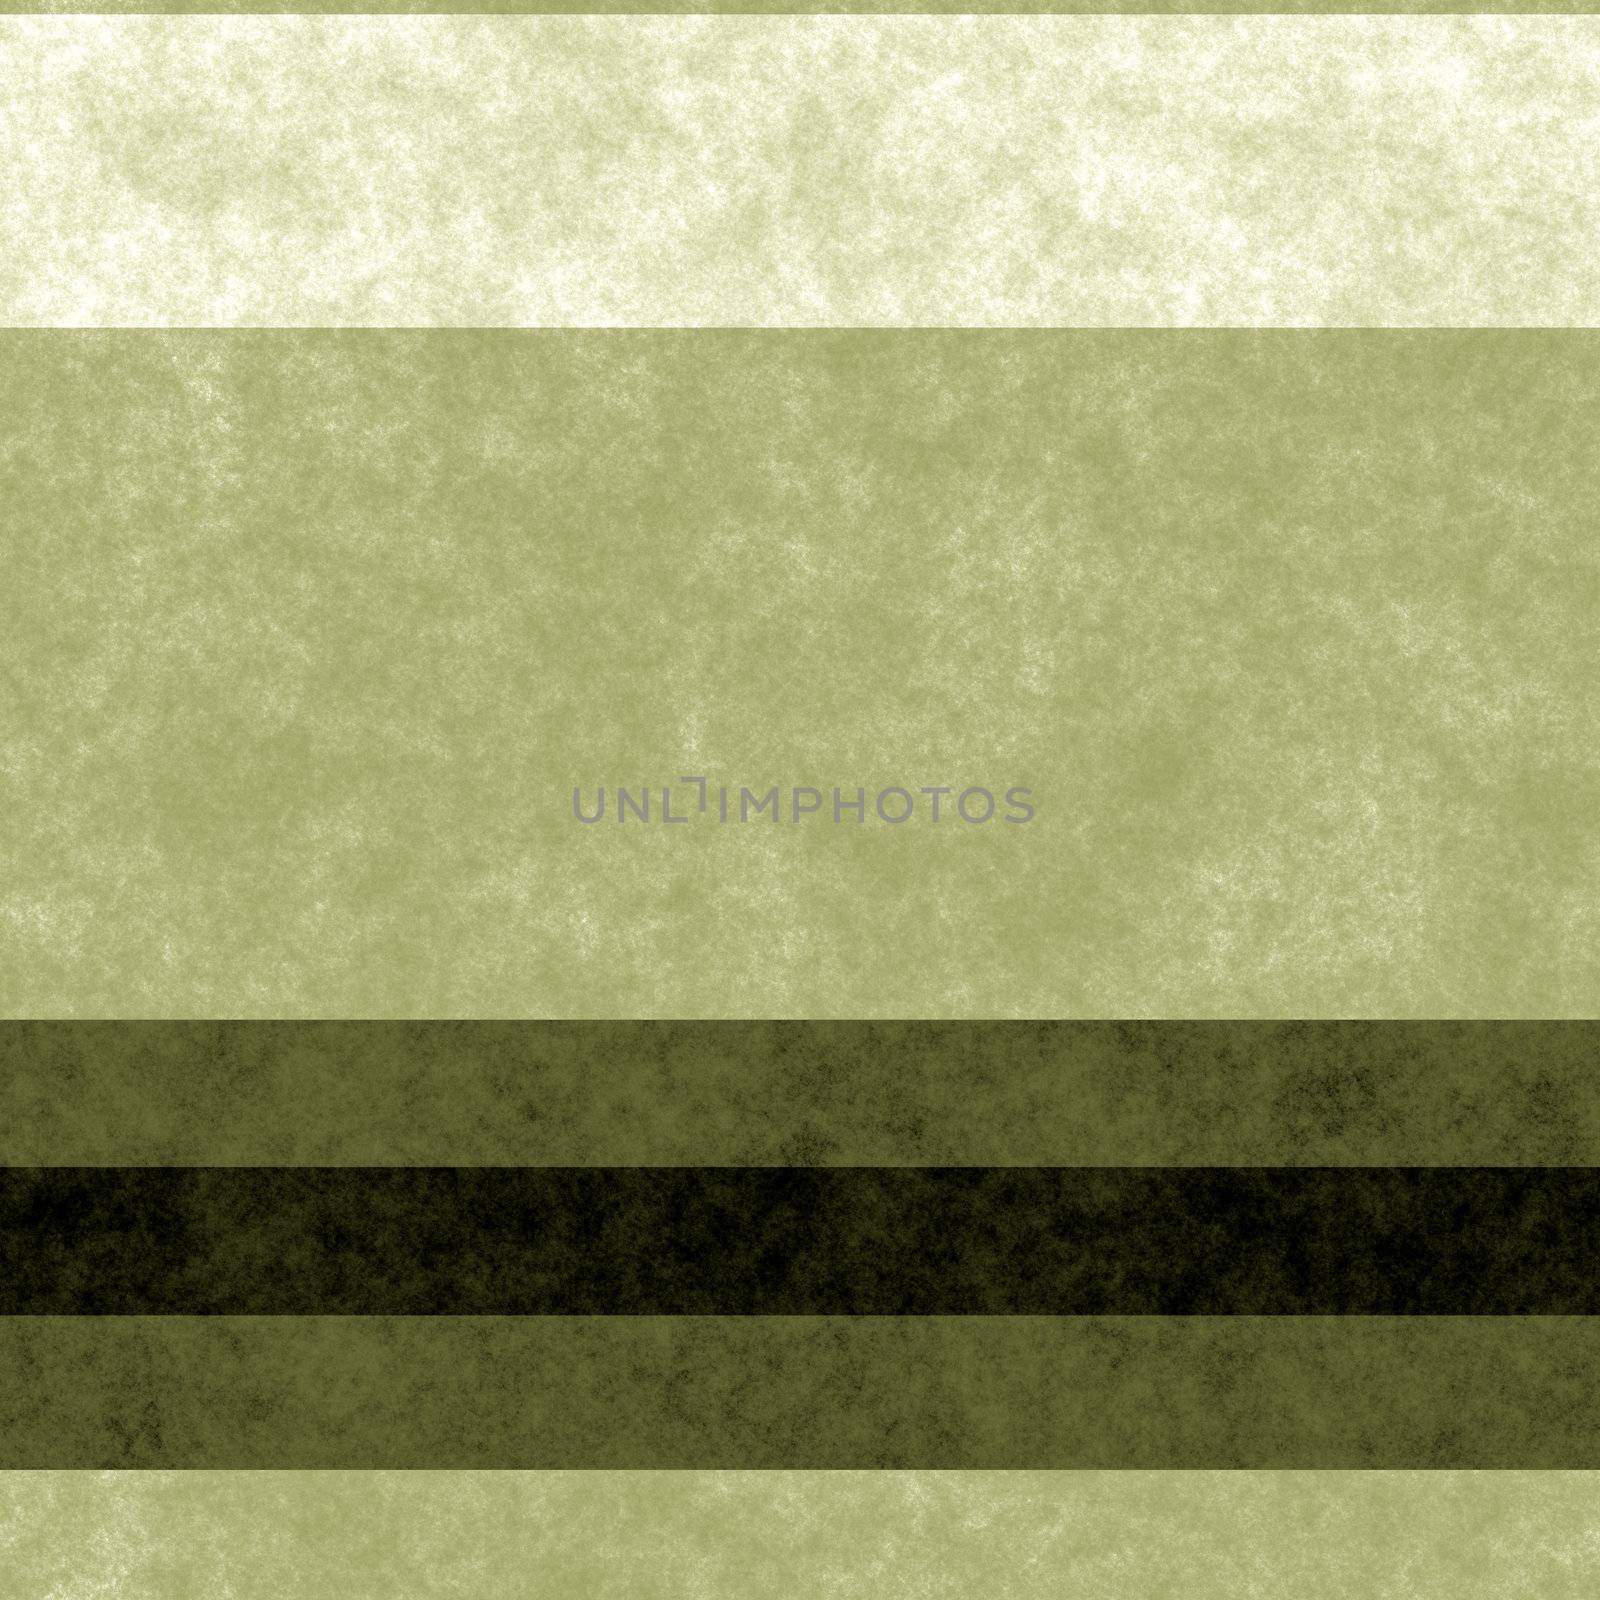 gray green  grunge wallpaper stripes that tile seamlessly as a pattern

